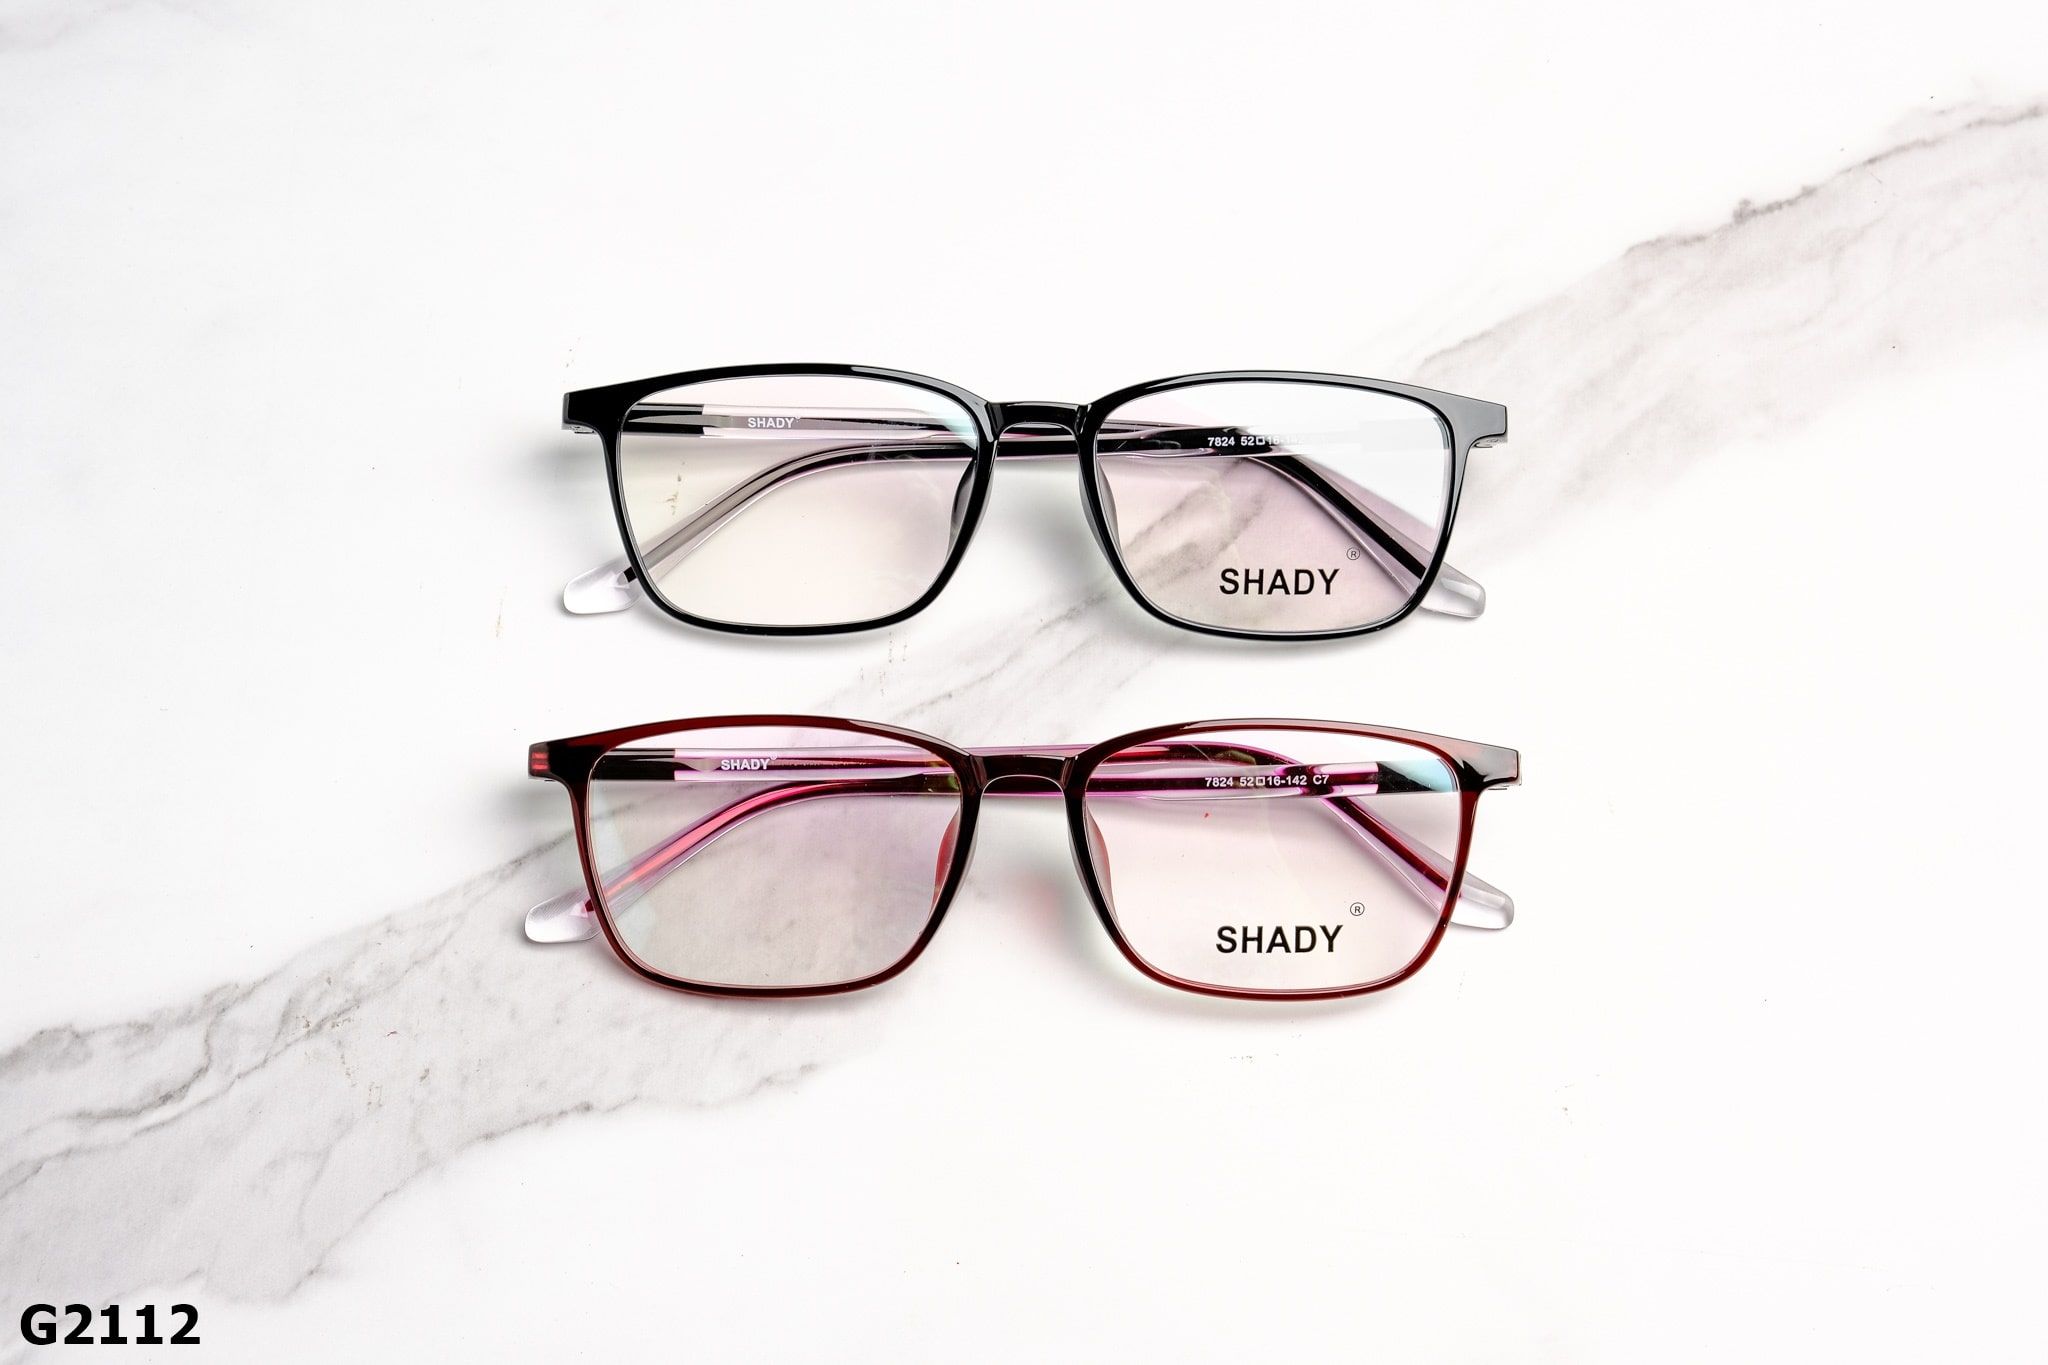  SHADY Eyewear - Glasses - G2112 